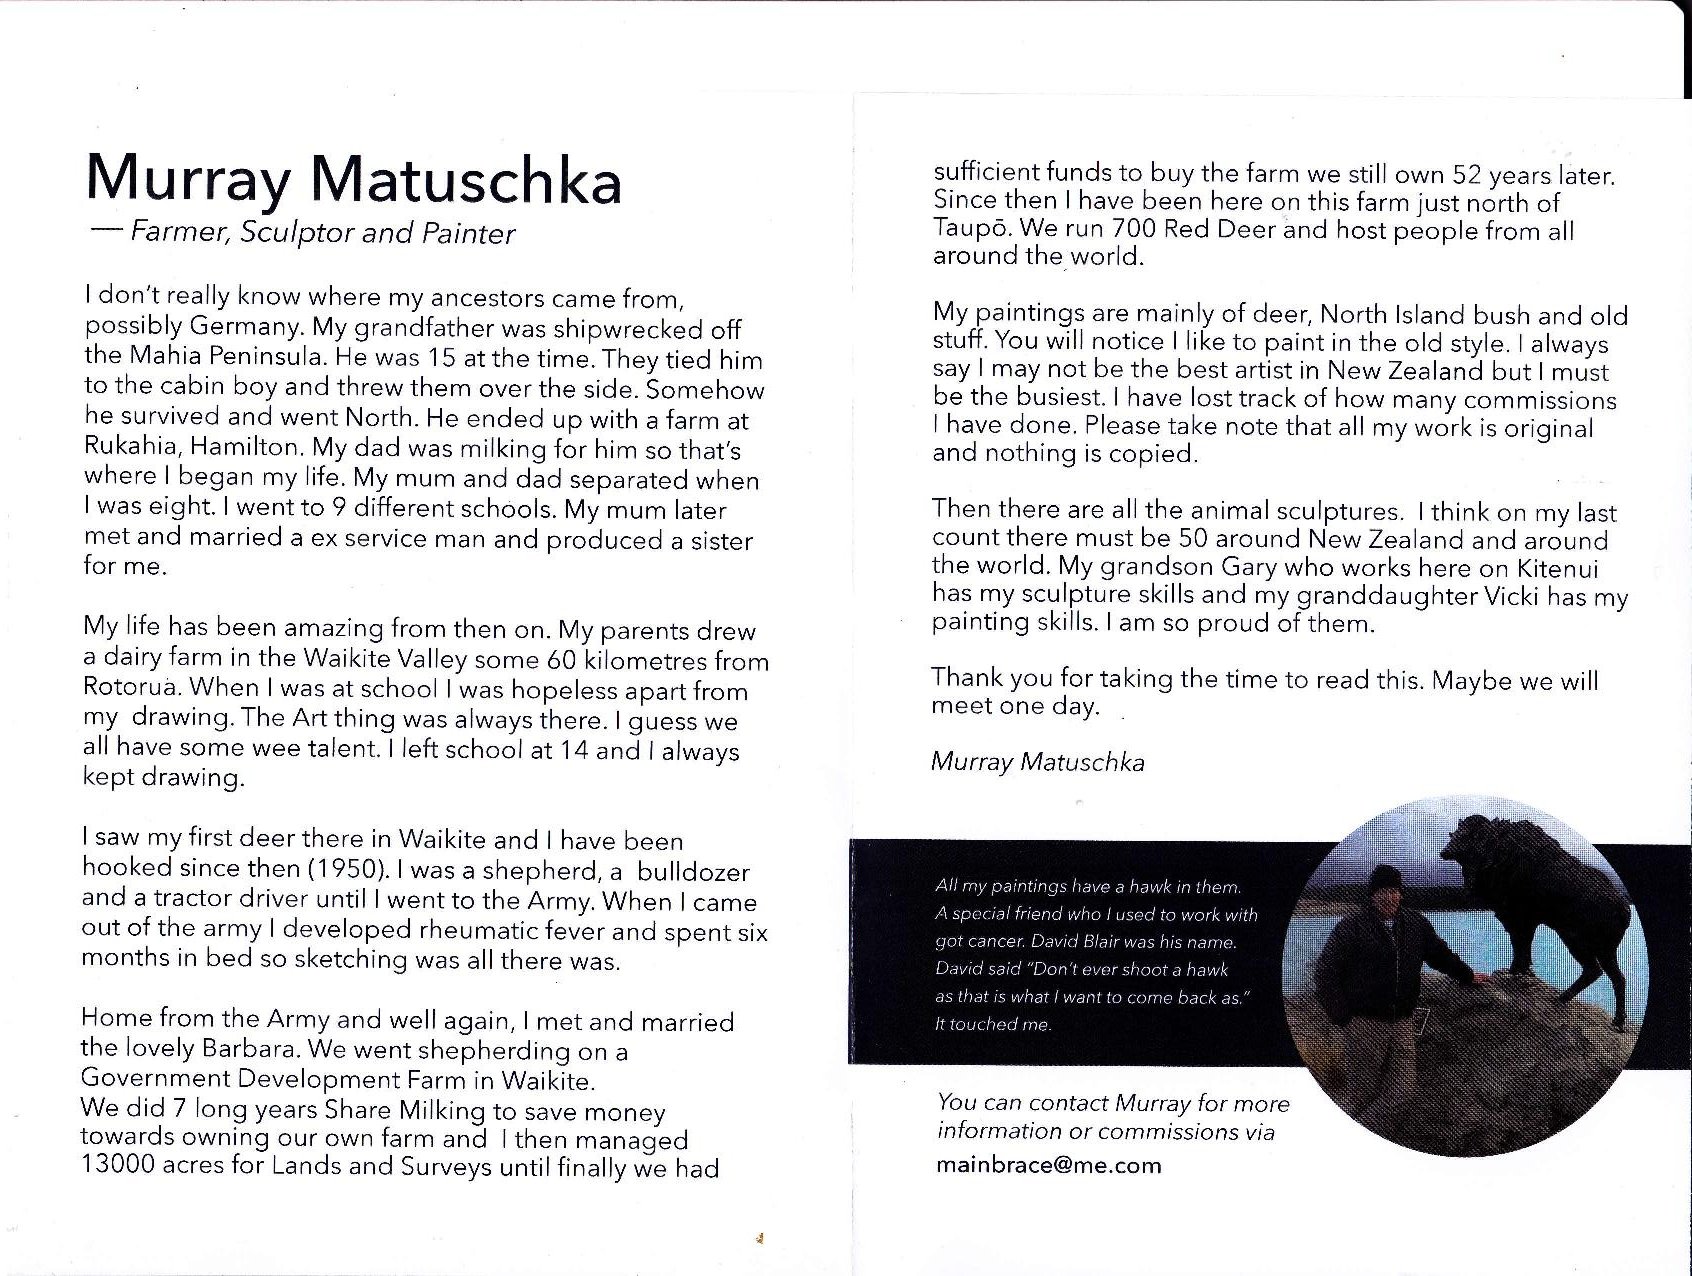 Murray Matuschka Profile - Visit Ruapehu.jpg